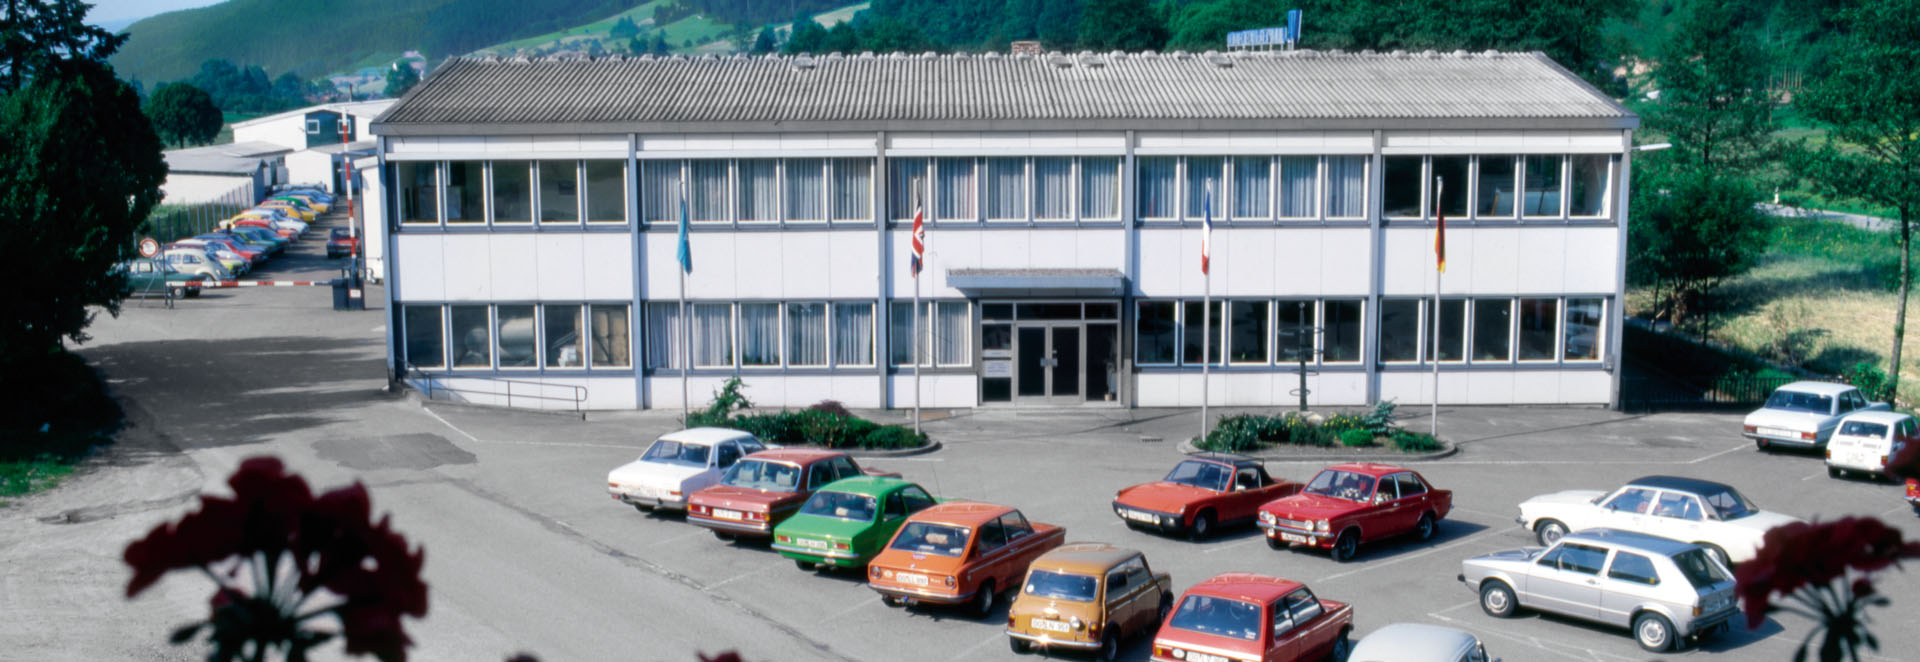 60 let společnosti Erwin Junker Maschinenfabrik GmbH